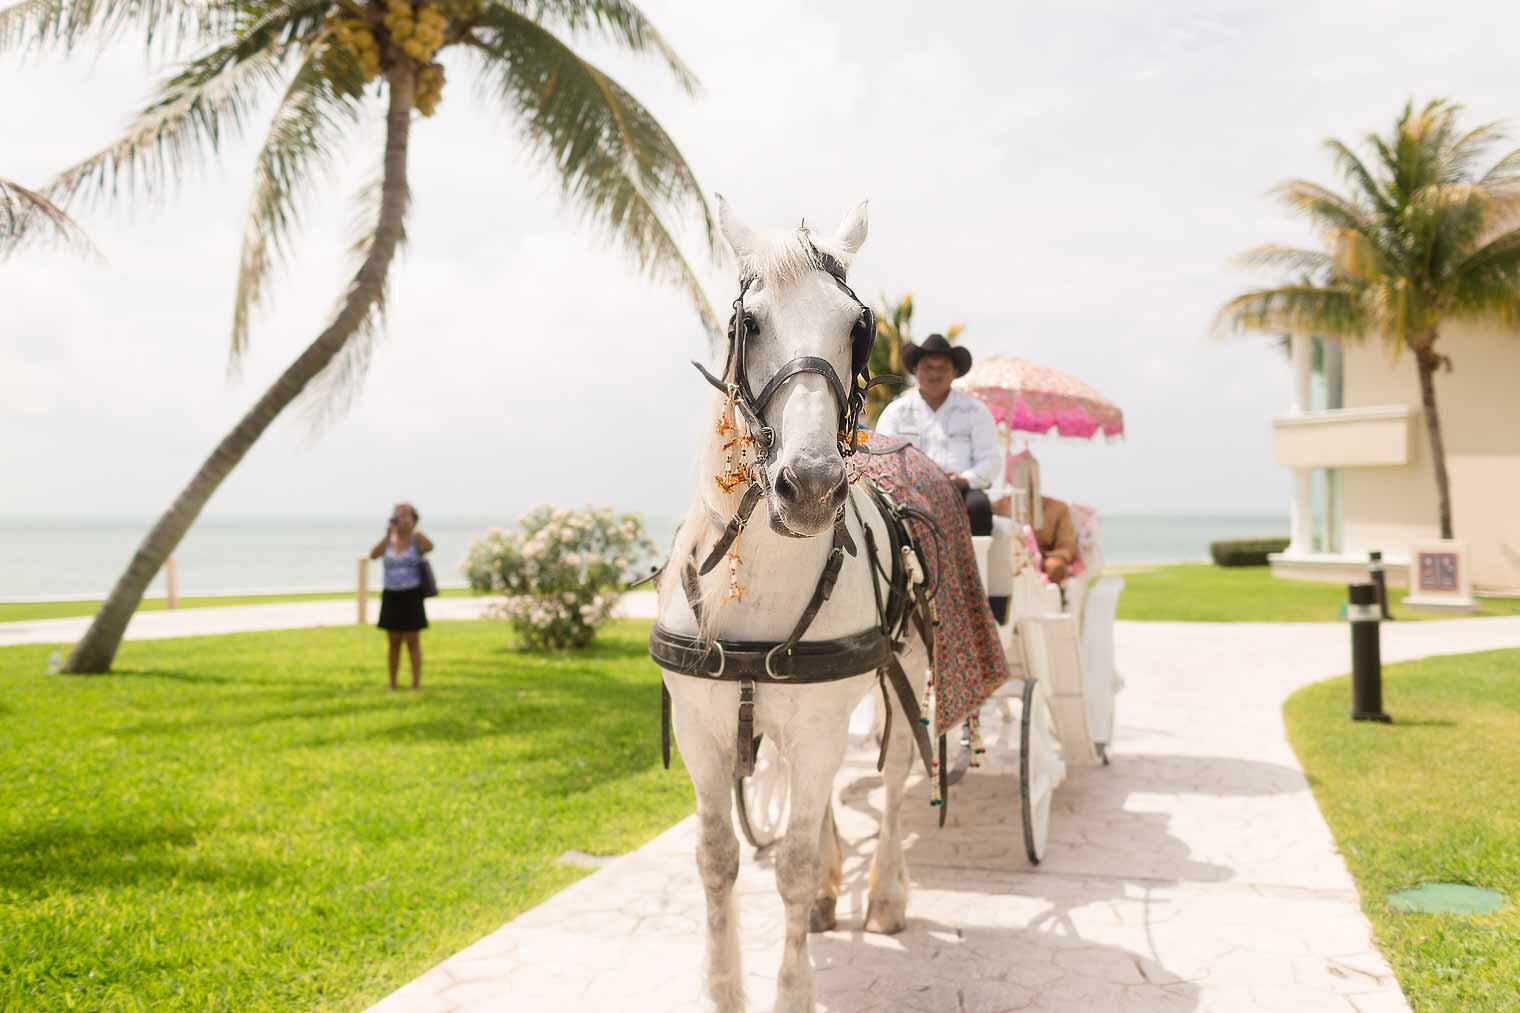 036-Cancun-South-Asian-wedding-photography-moon-palace-resort-Mexico.jpg